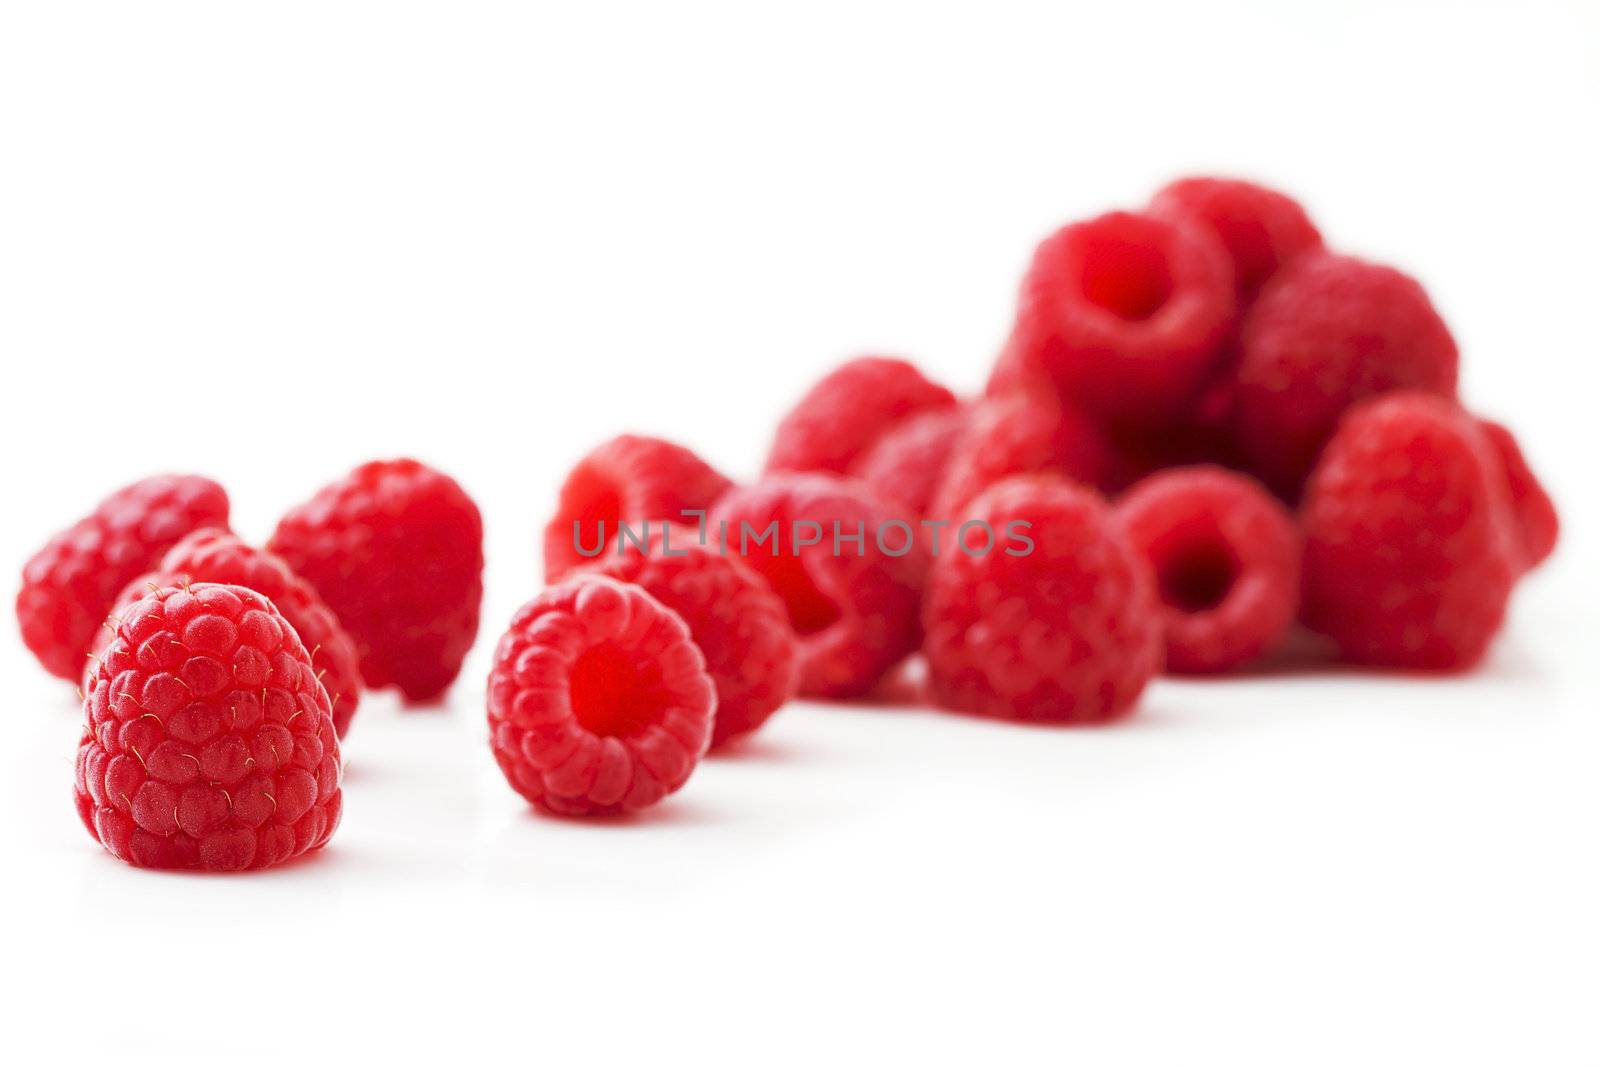 some raspberries by RobStark